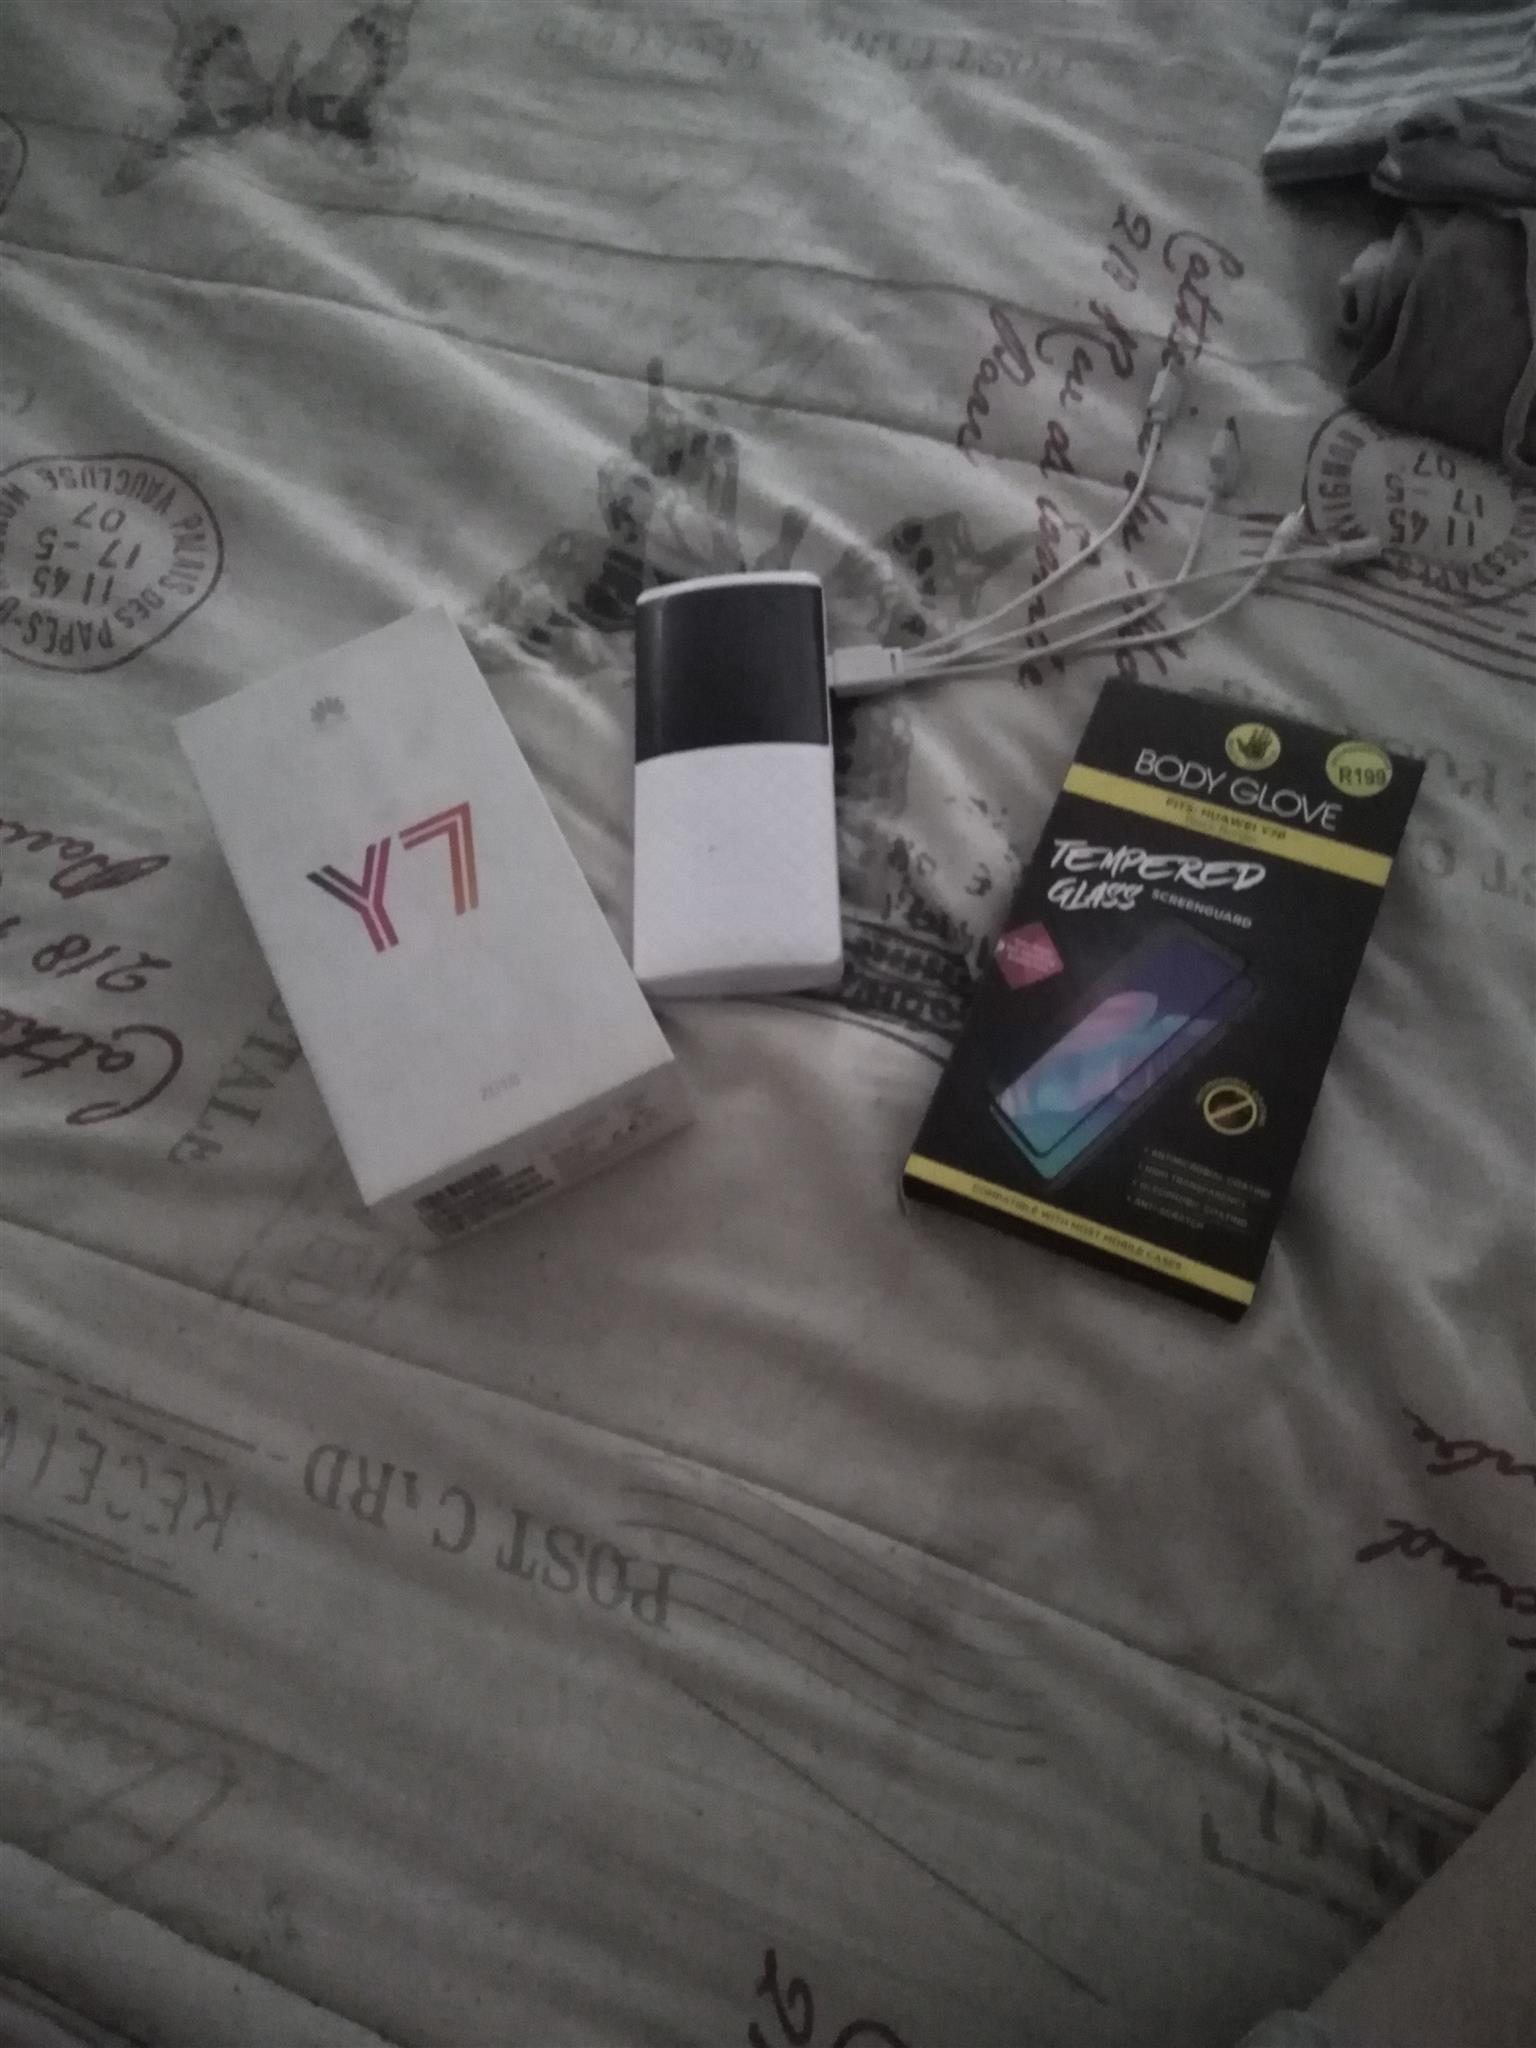 Huawei phone Y7 original box with sim remover keyer